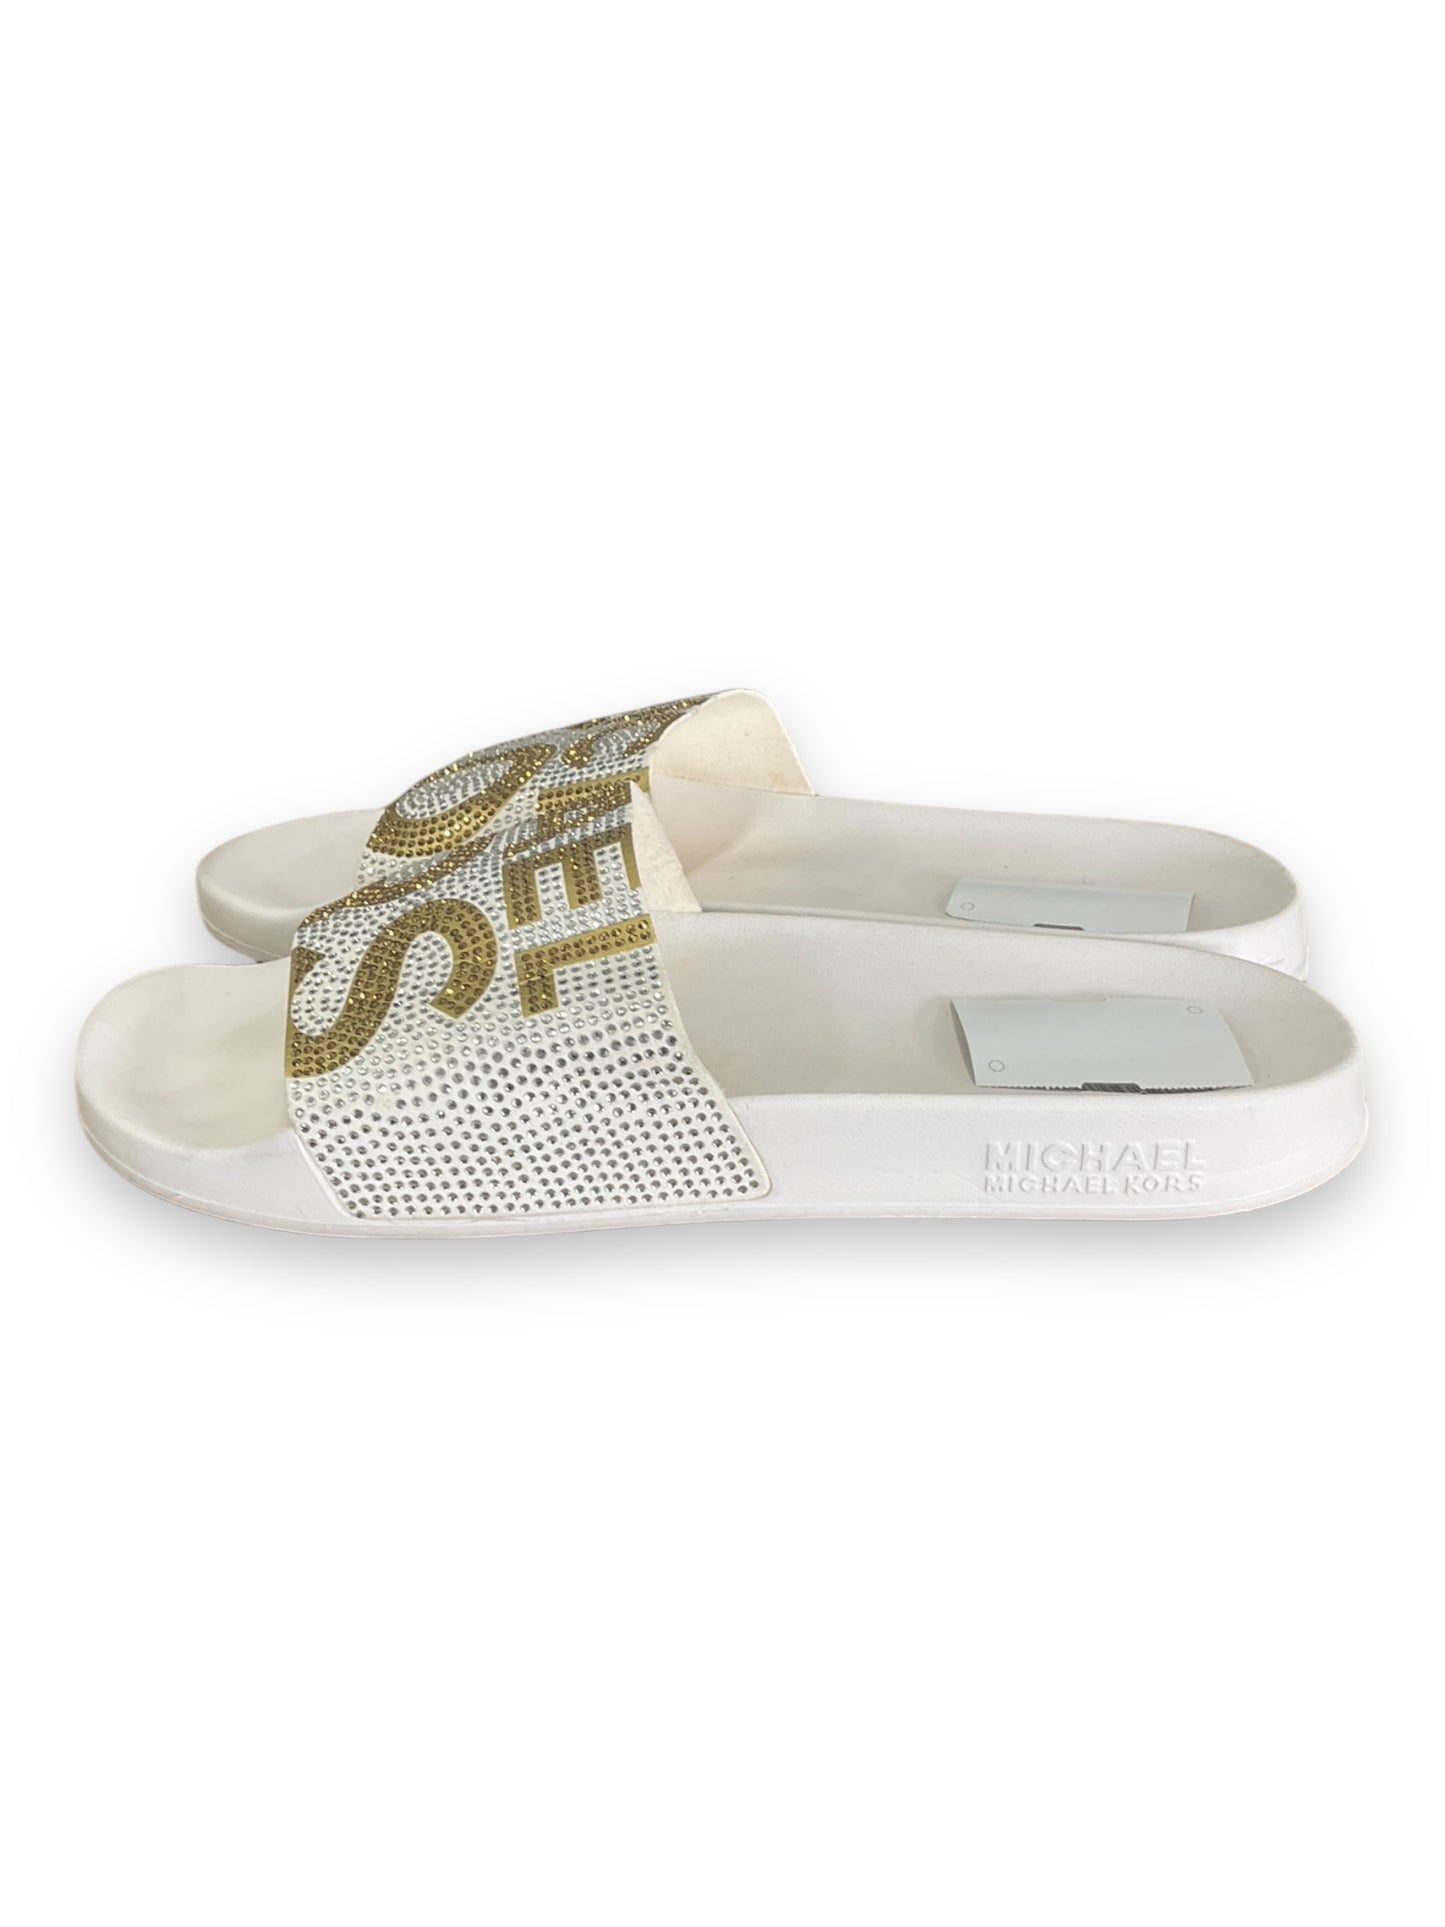 Sandals Flats By Michael Kors  Size: 11